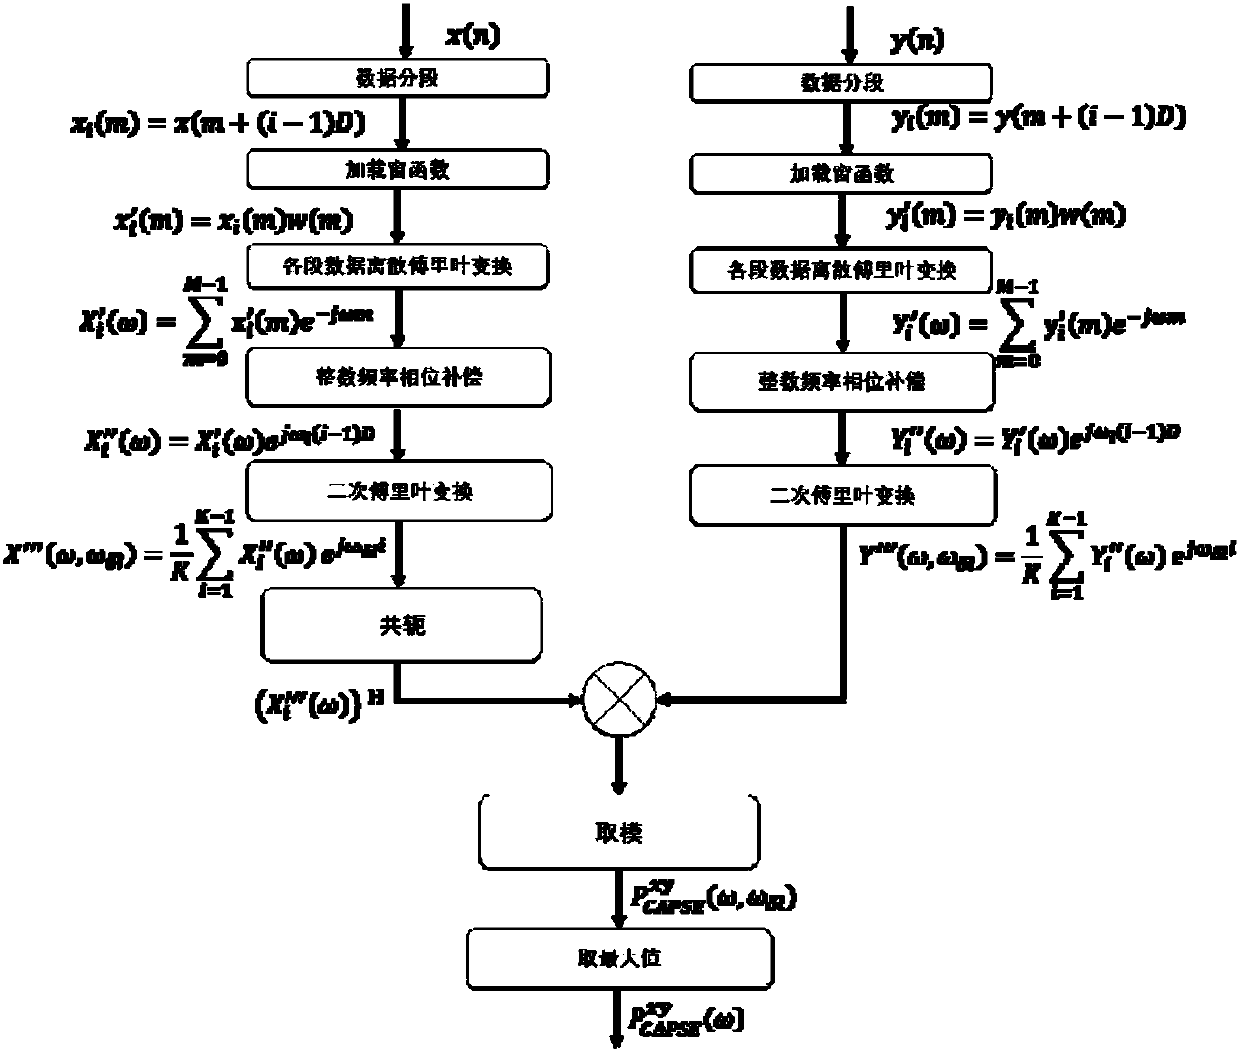 Method for estimating power spectrum of harmonic signal by coherent averaging method